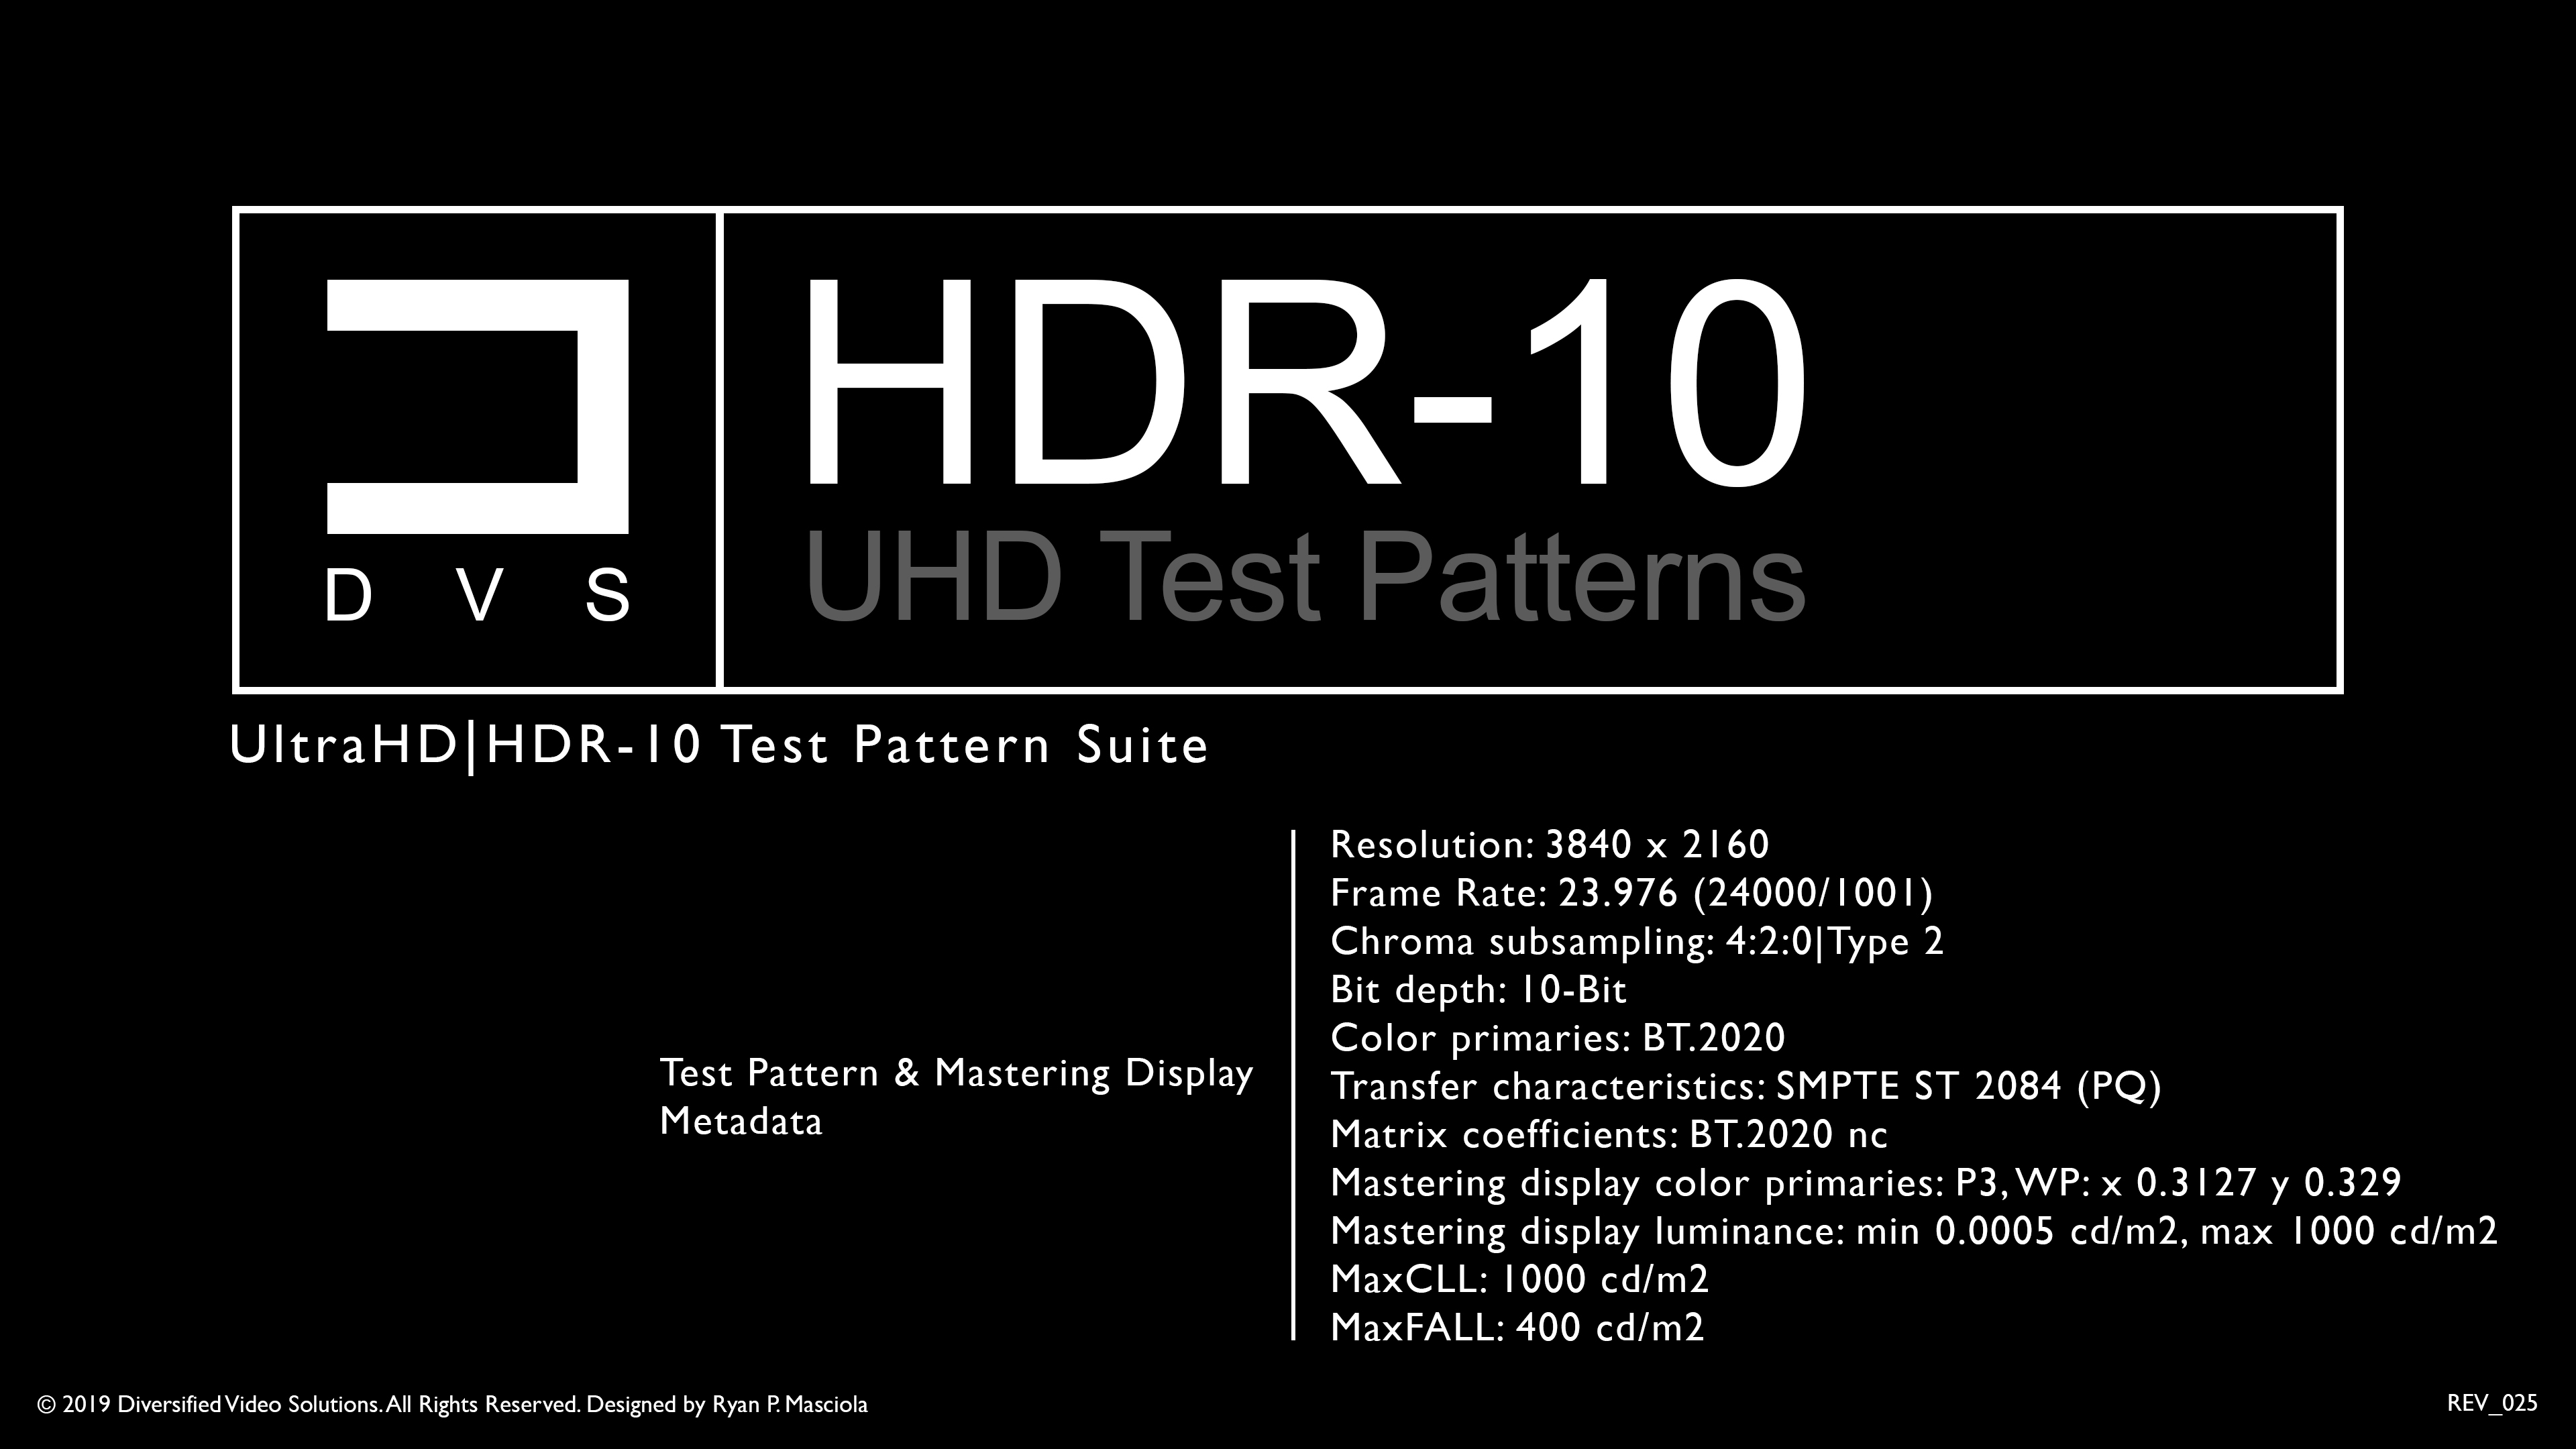 HDR-10